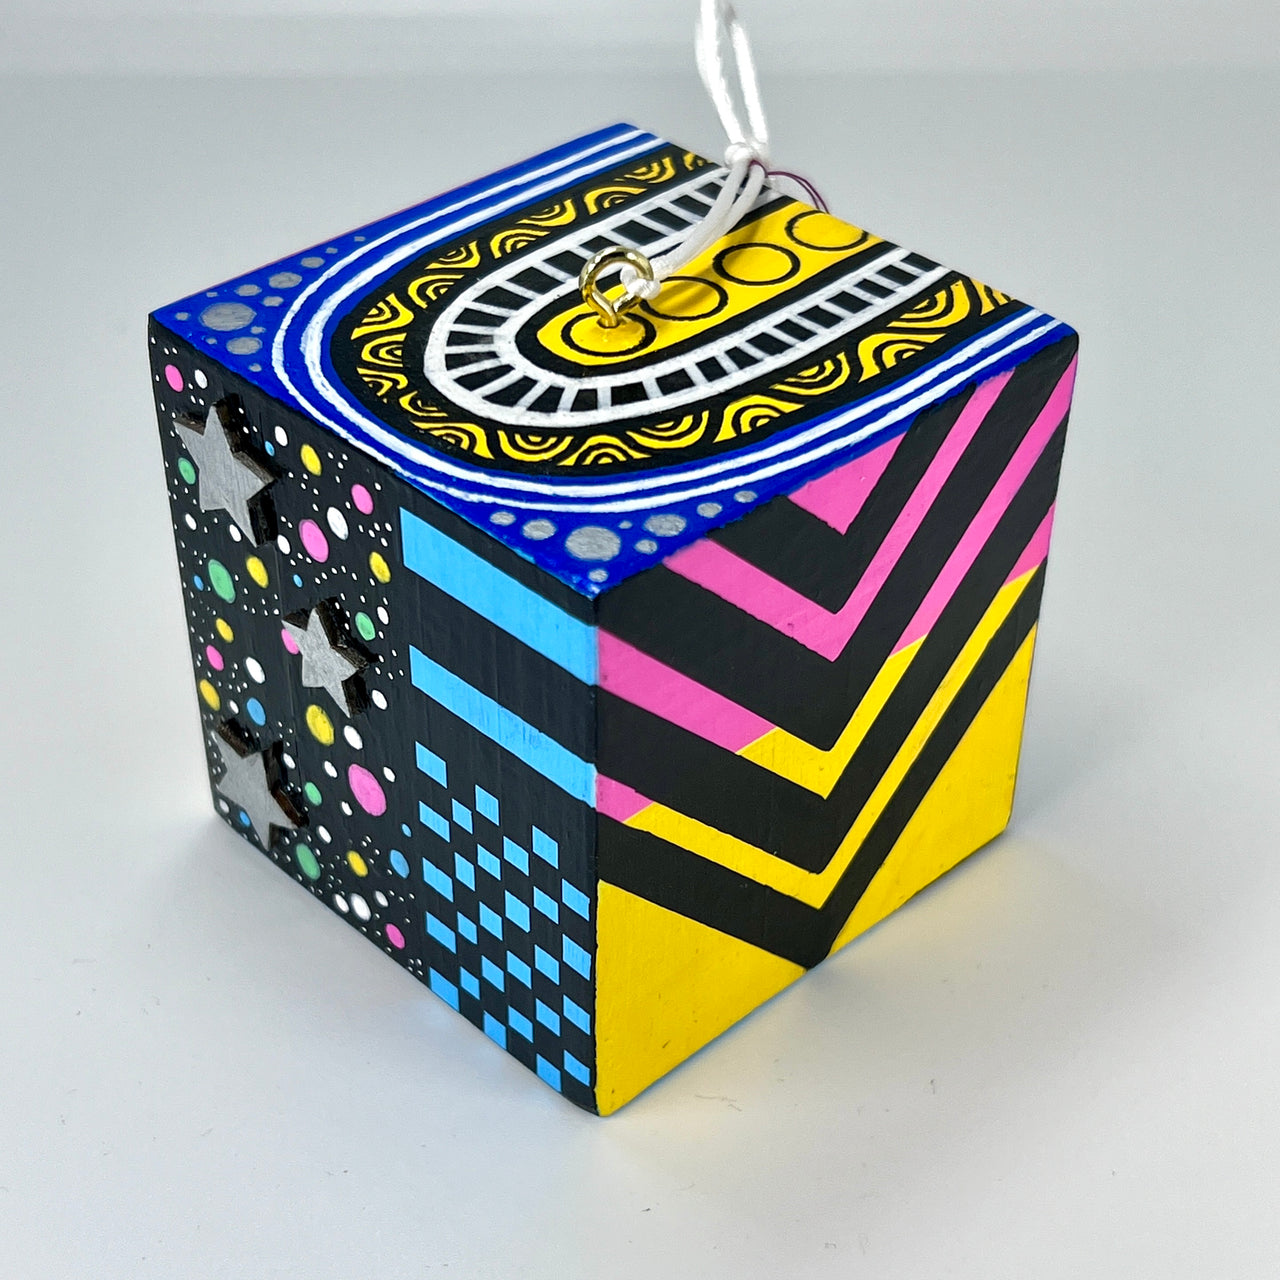 #17 - 3D Cube Art - 2.25" cube